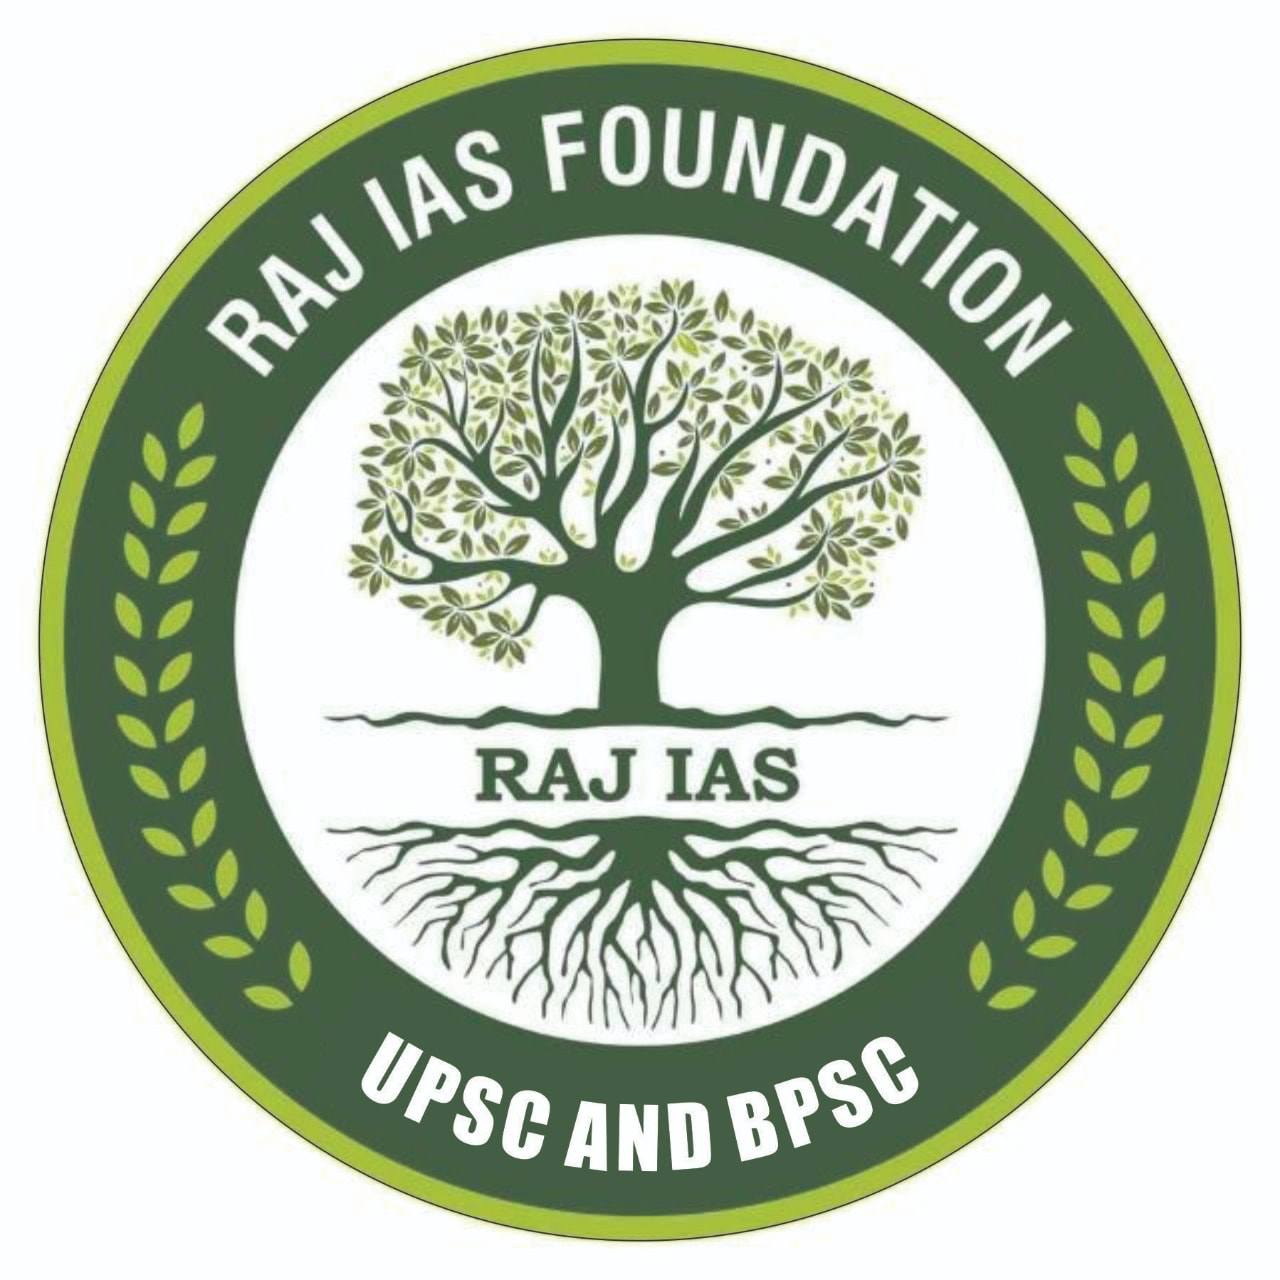 Raj IAS Foundation